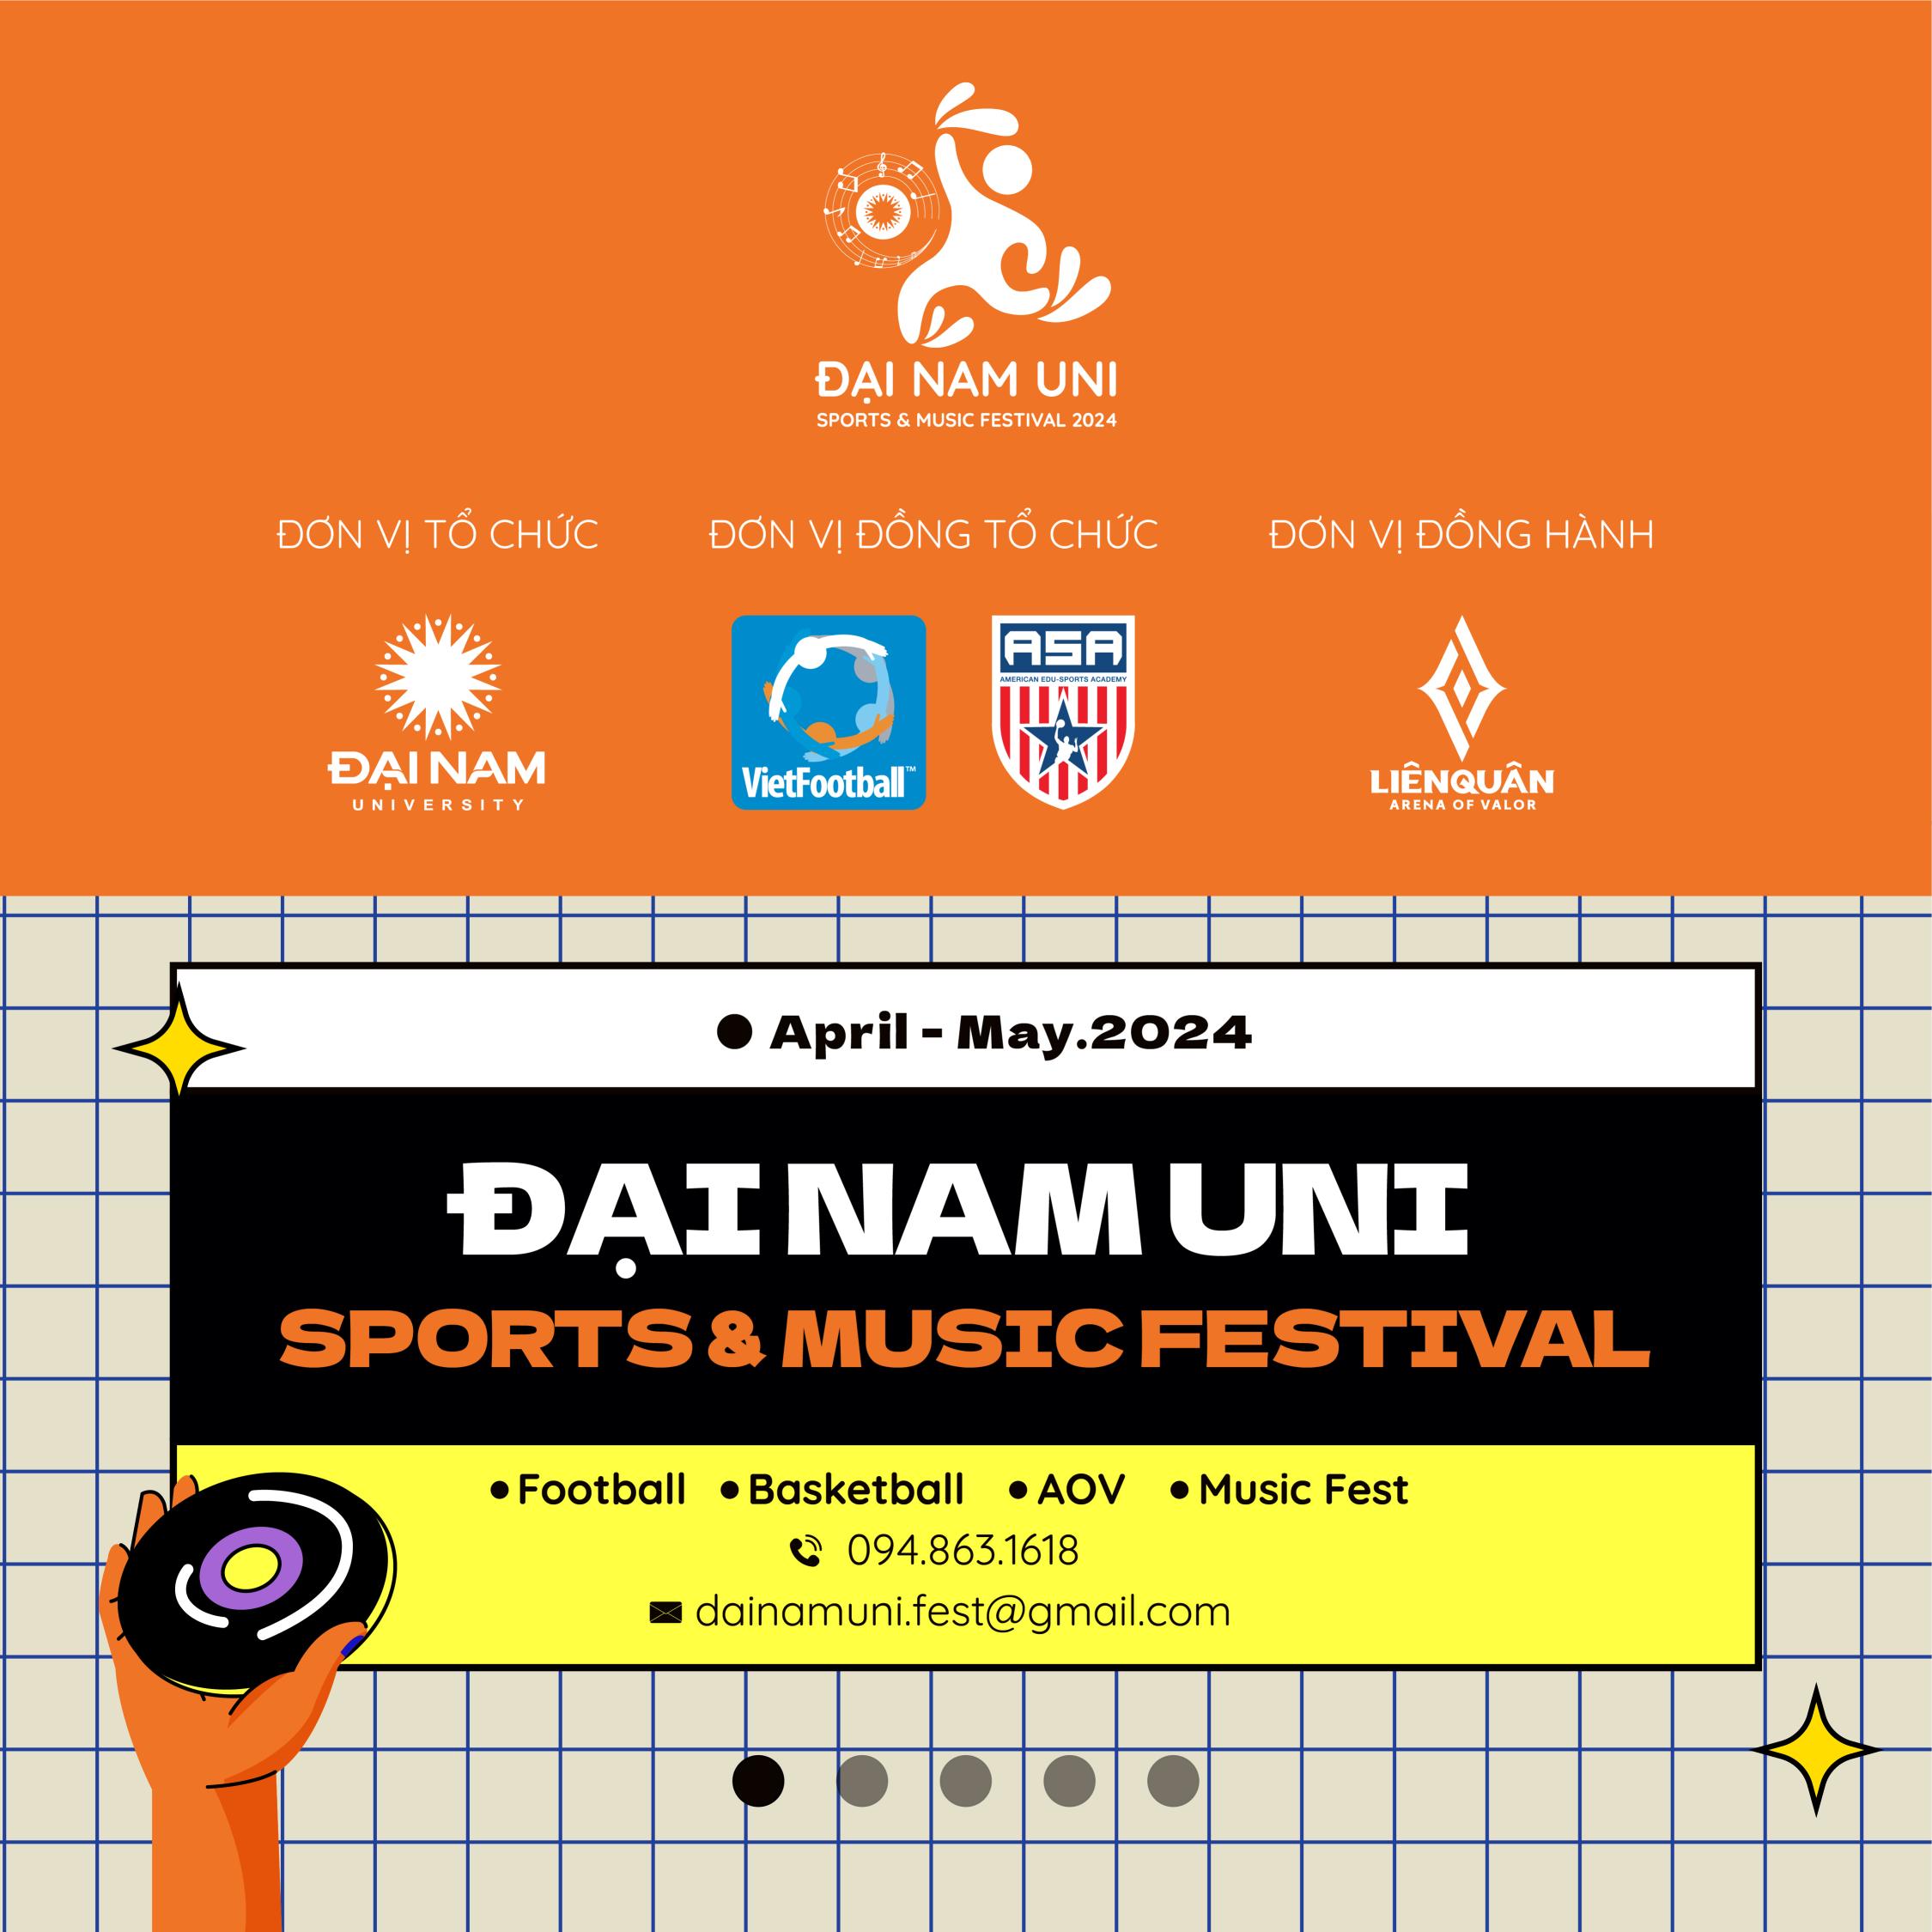 dainam-uni-sports-music-festival